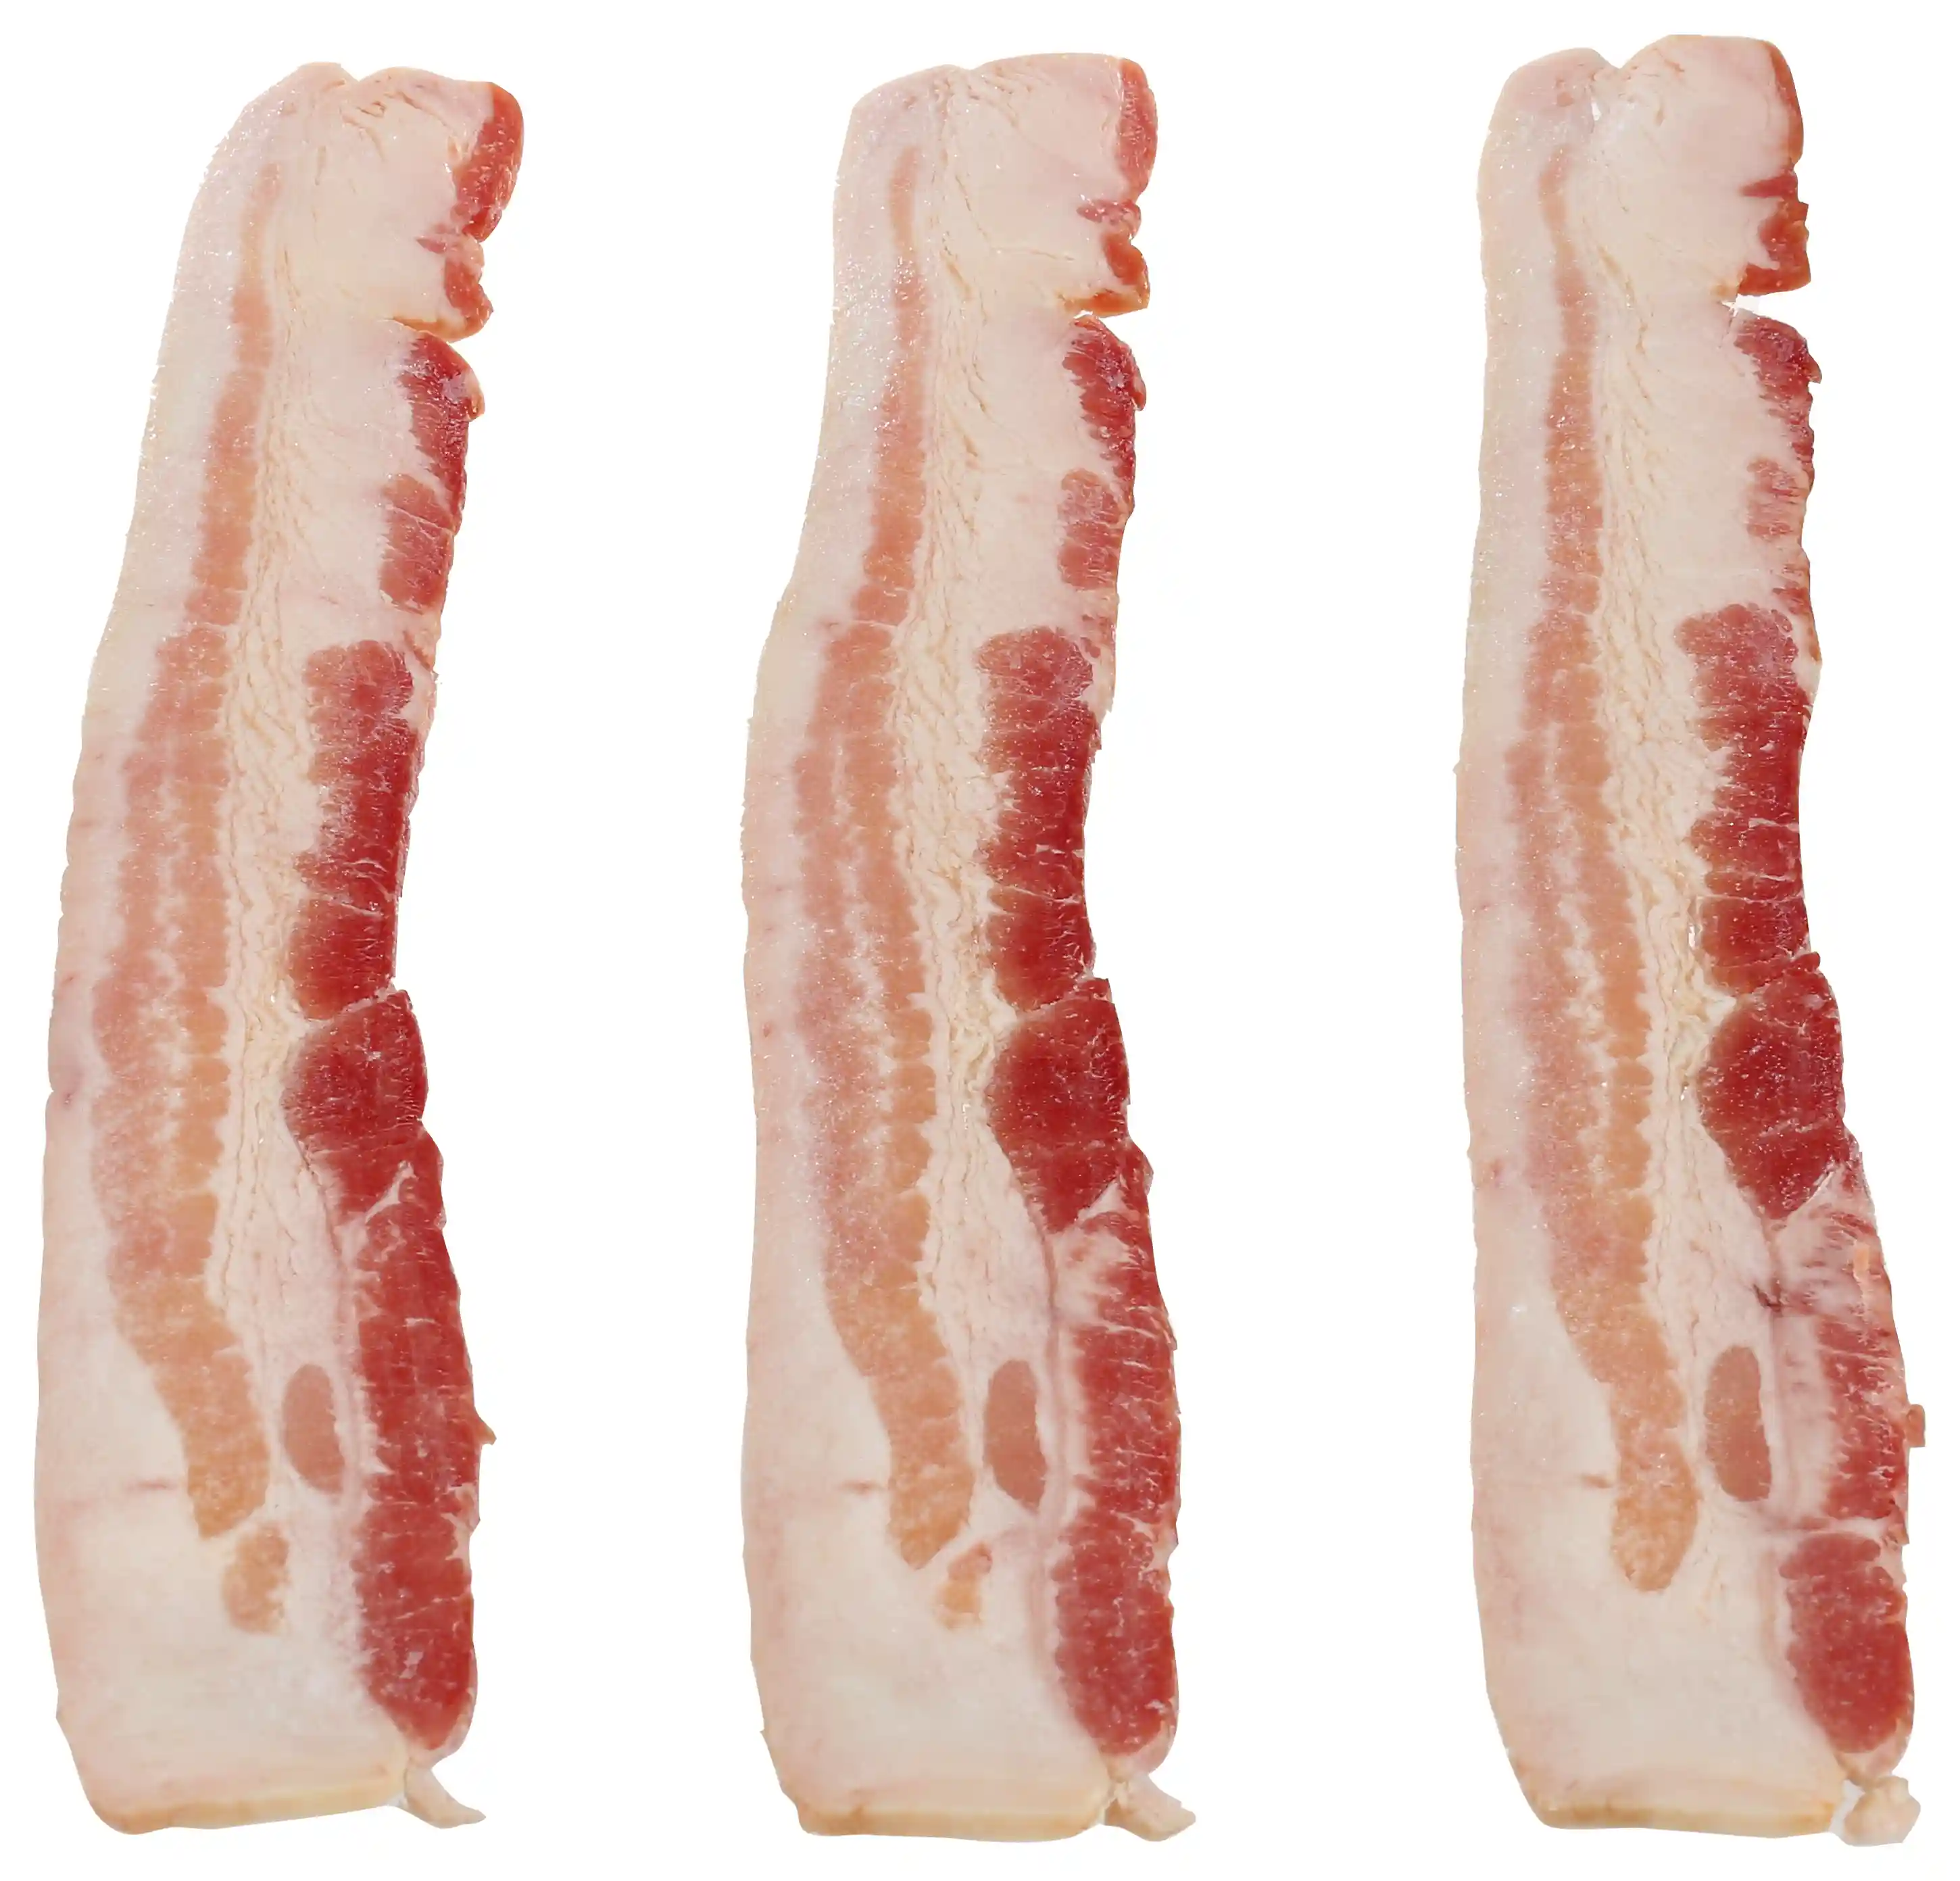 Wright® Brand Naturally Smoked Thin Sliced Bacon, Bulk, 30 Lbs, 18-22 Slices per Pound, Frozen_image_11